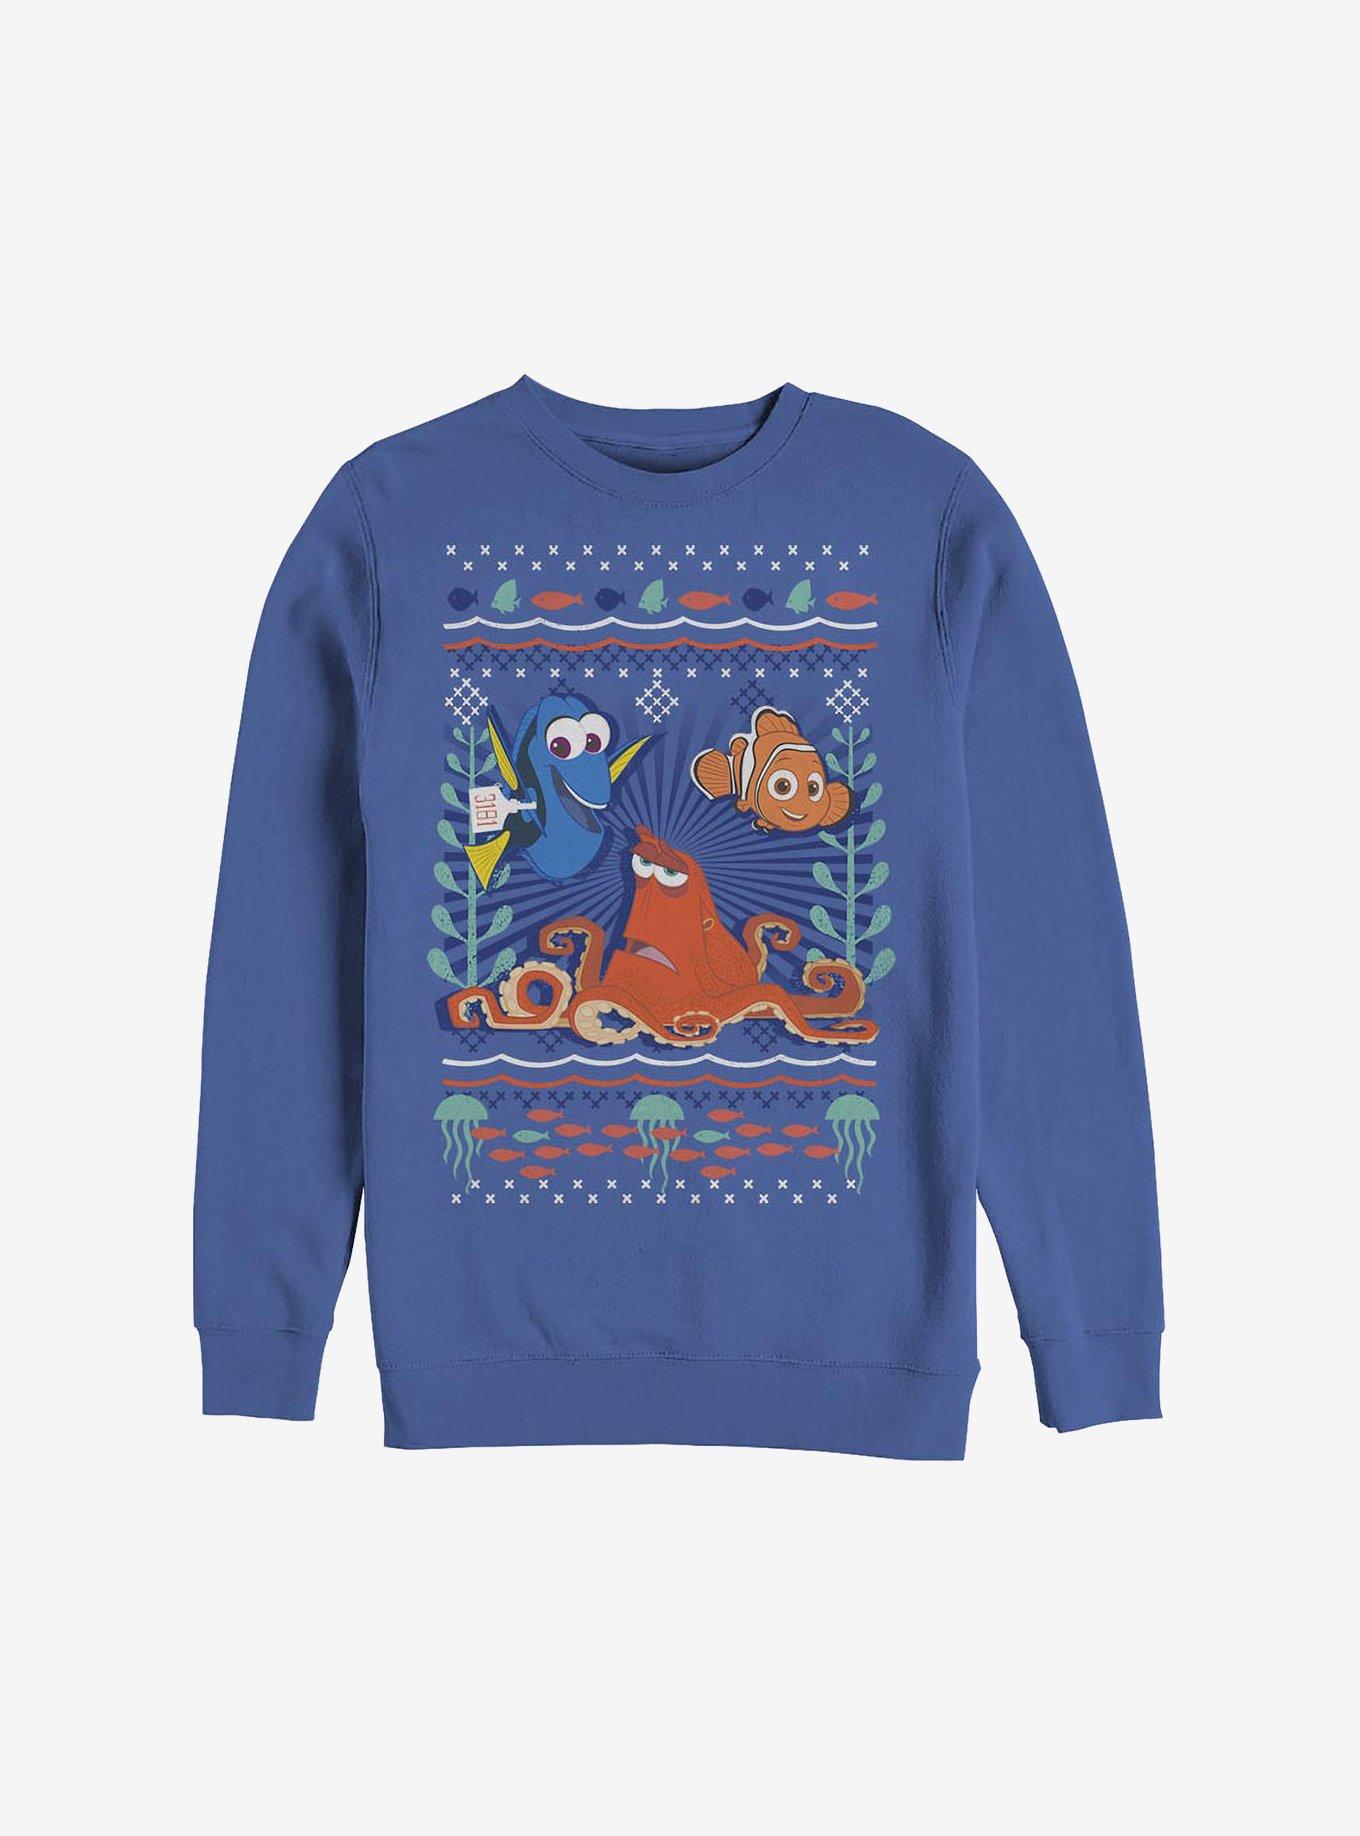 Disney Pixar Finding Nemo Sea Ugly Christmas Sweater Sweatshirt, ROYAL, hi-res